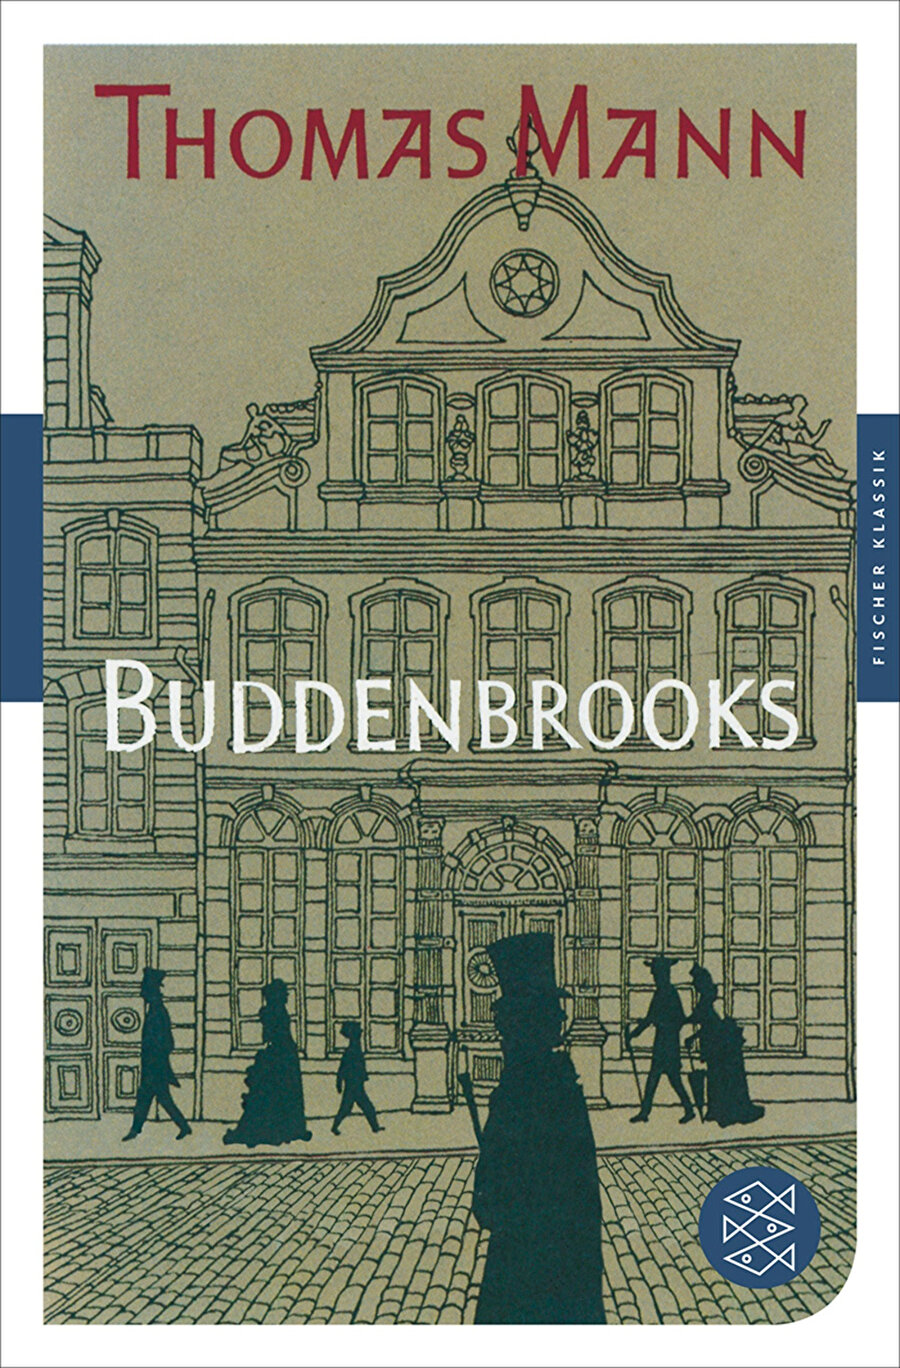 Buddenbrooks, Thomas Mann